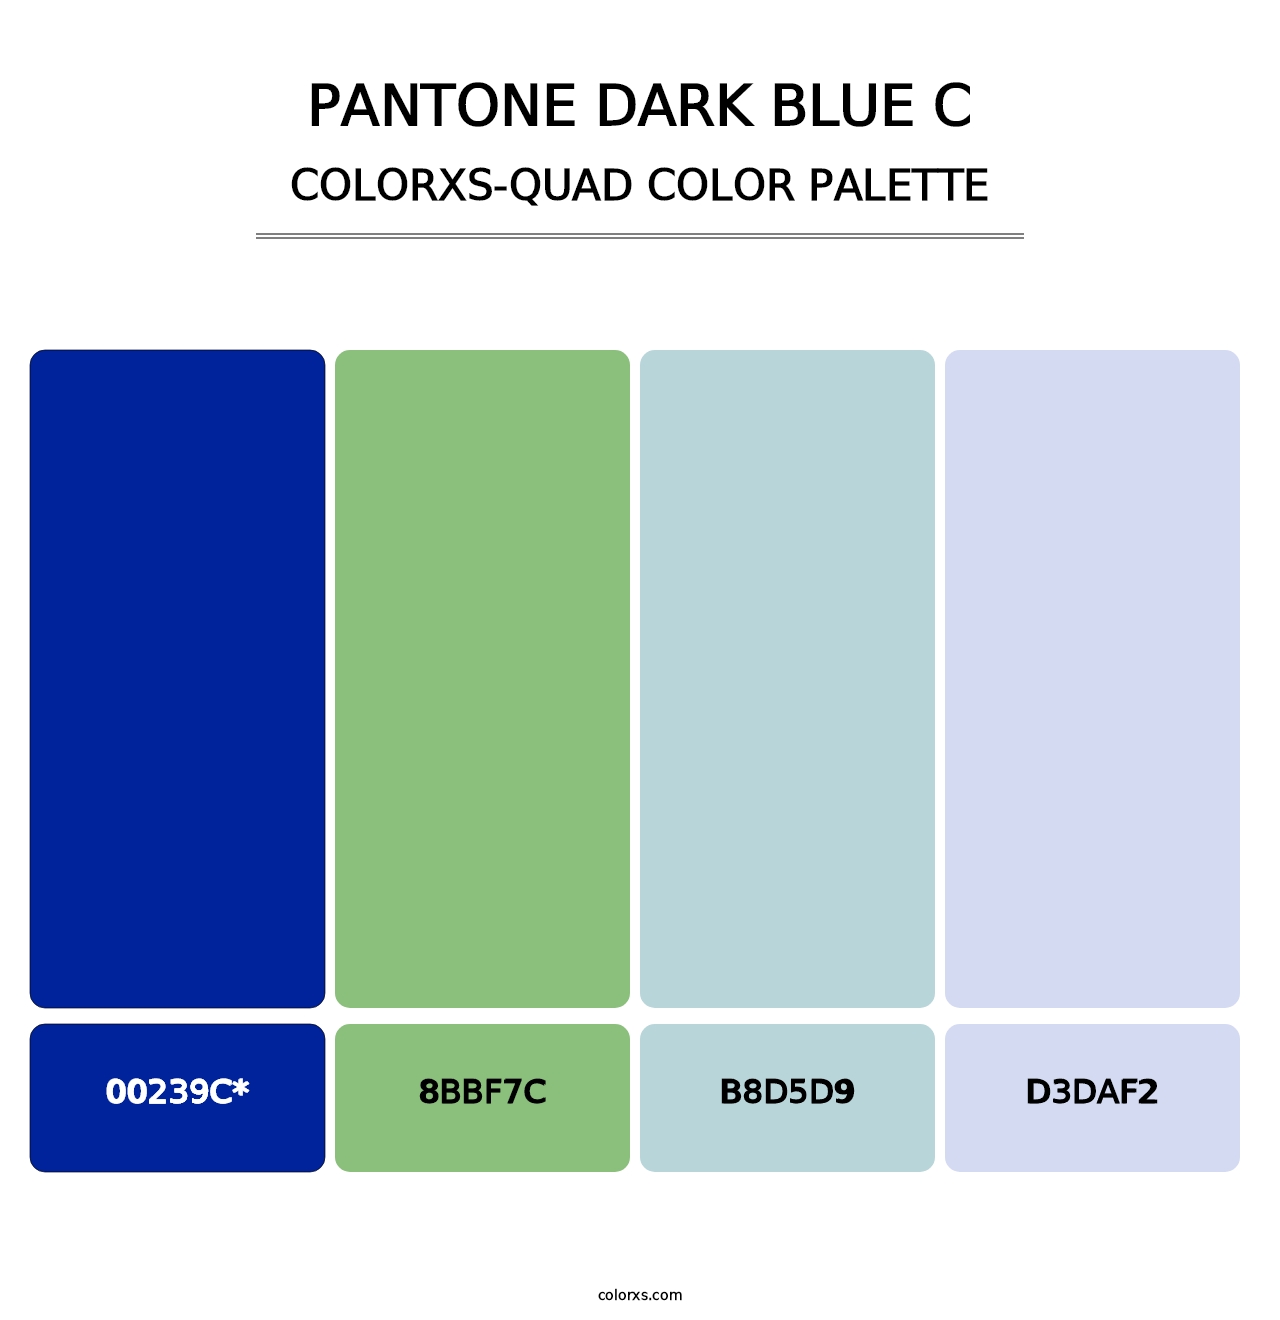 PANTONE Dark Blue C - Colorxs Quad Palette